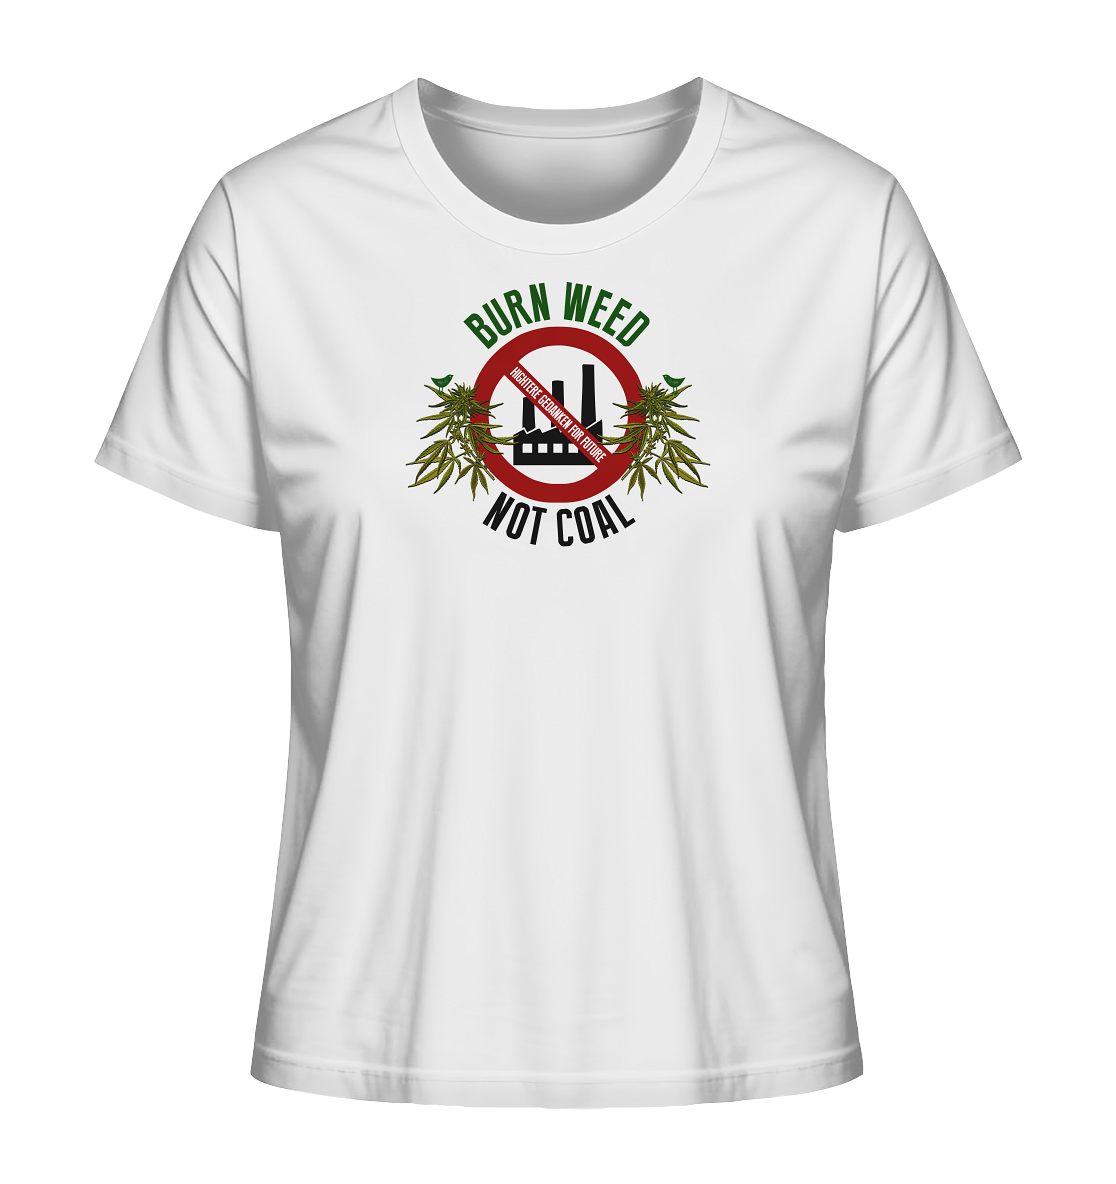 Burn weed not coal - Ladies Organic Shirt